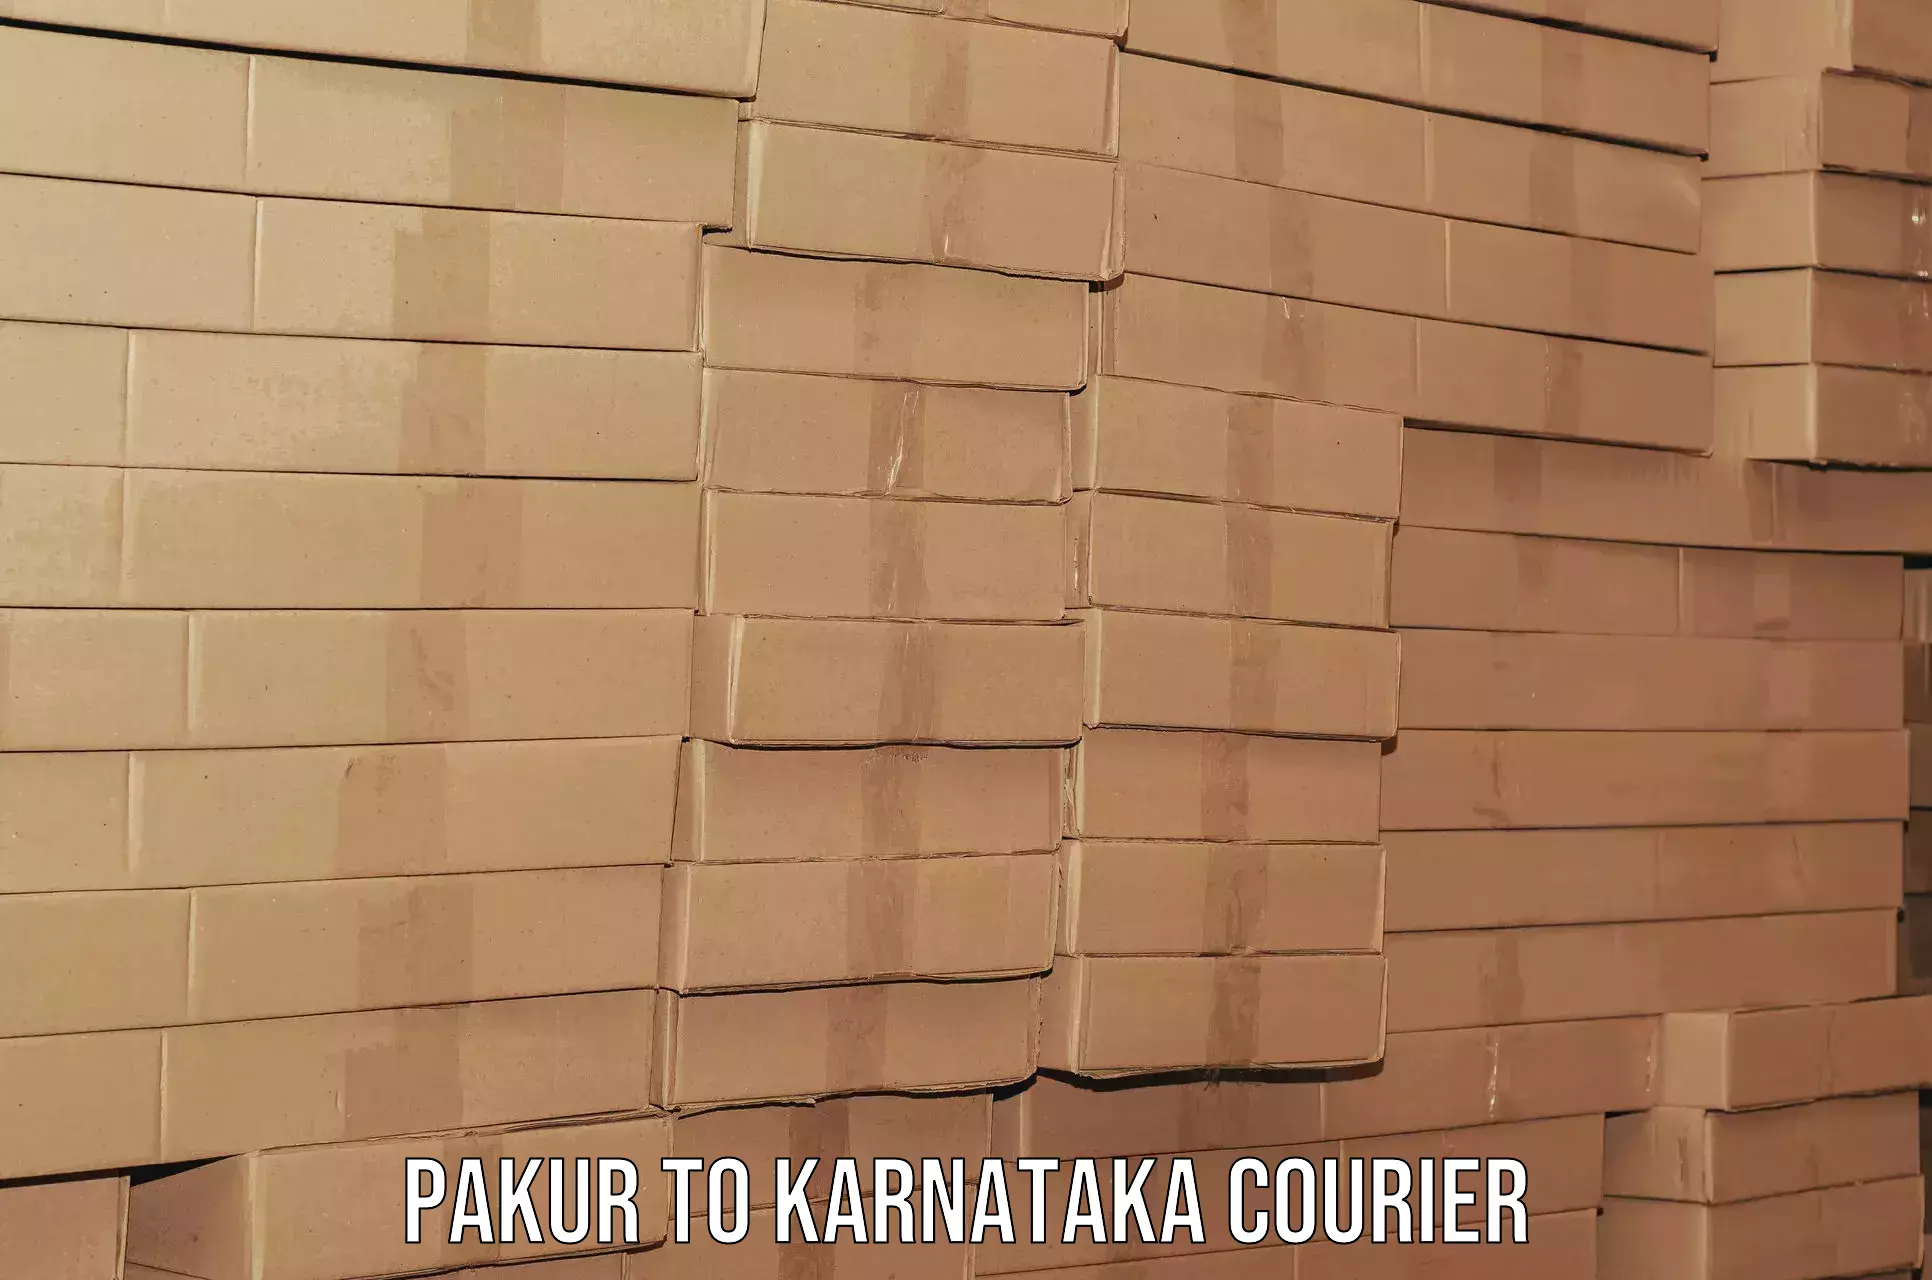 Moving and packing experts Pakur to Karnataka